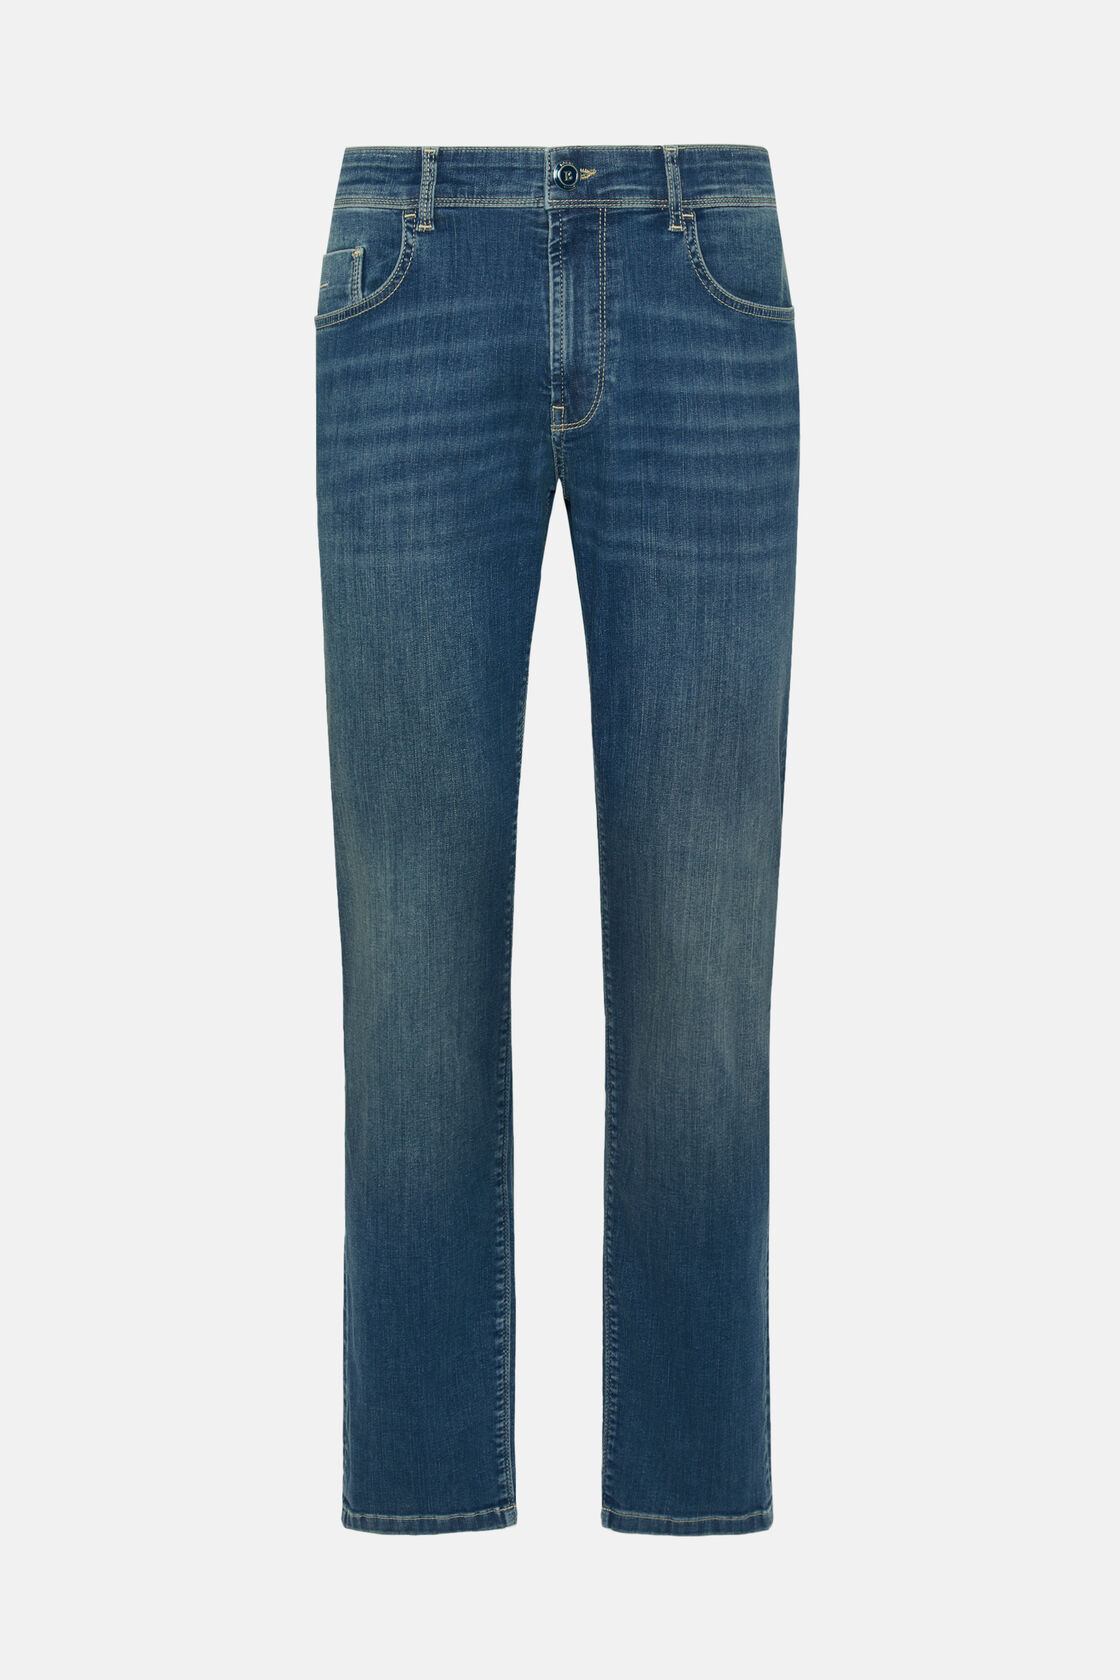 Medium Blue Stretch Denim Jeans, , hi-res